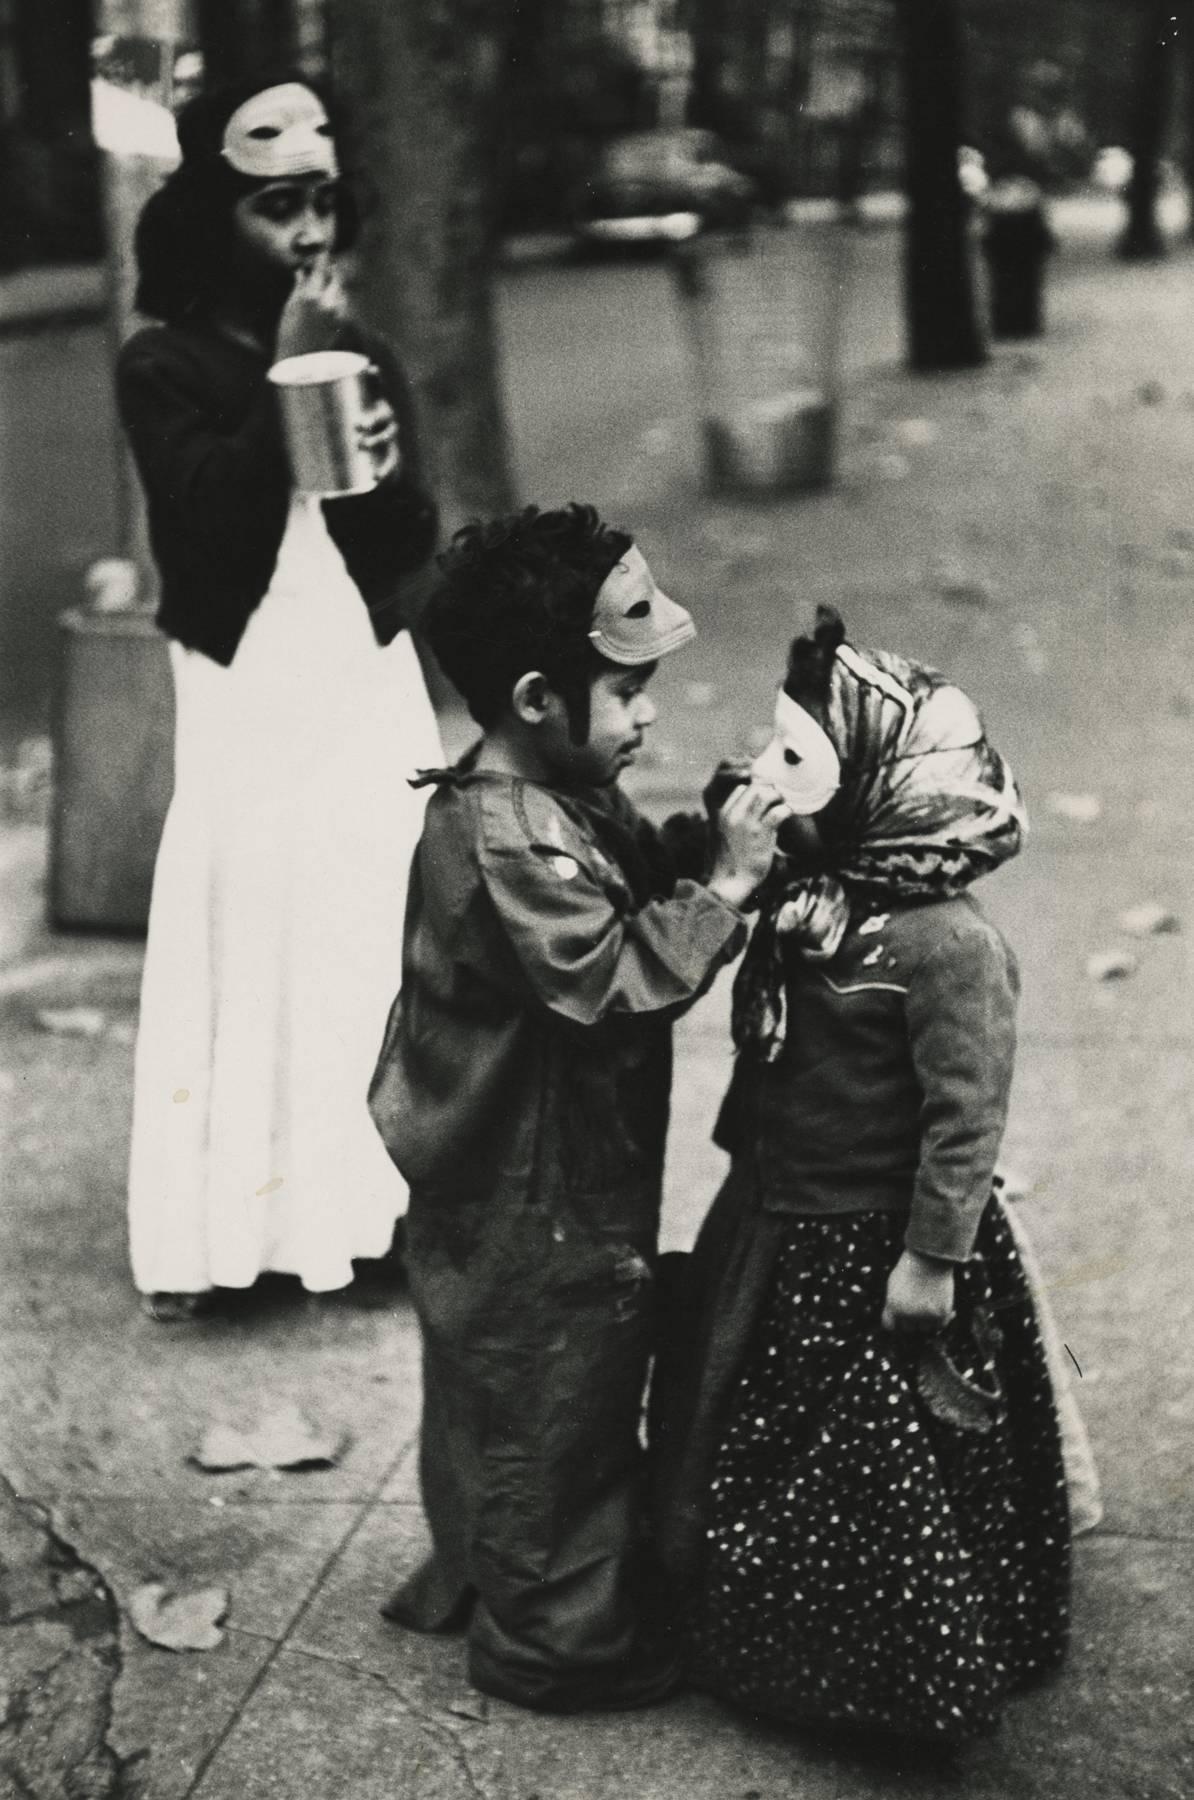 Steve Schapiro Black and White Photograph - Halloween Brooklyn Heights